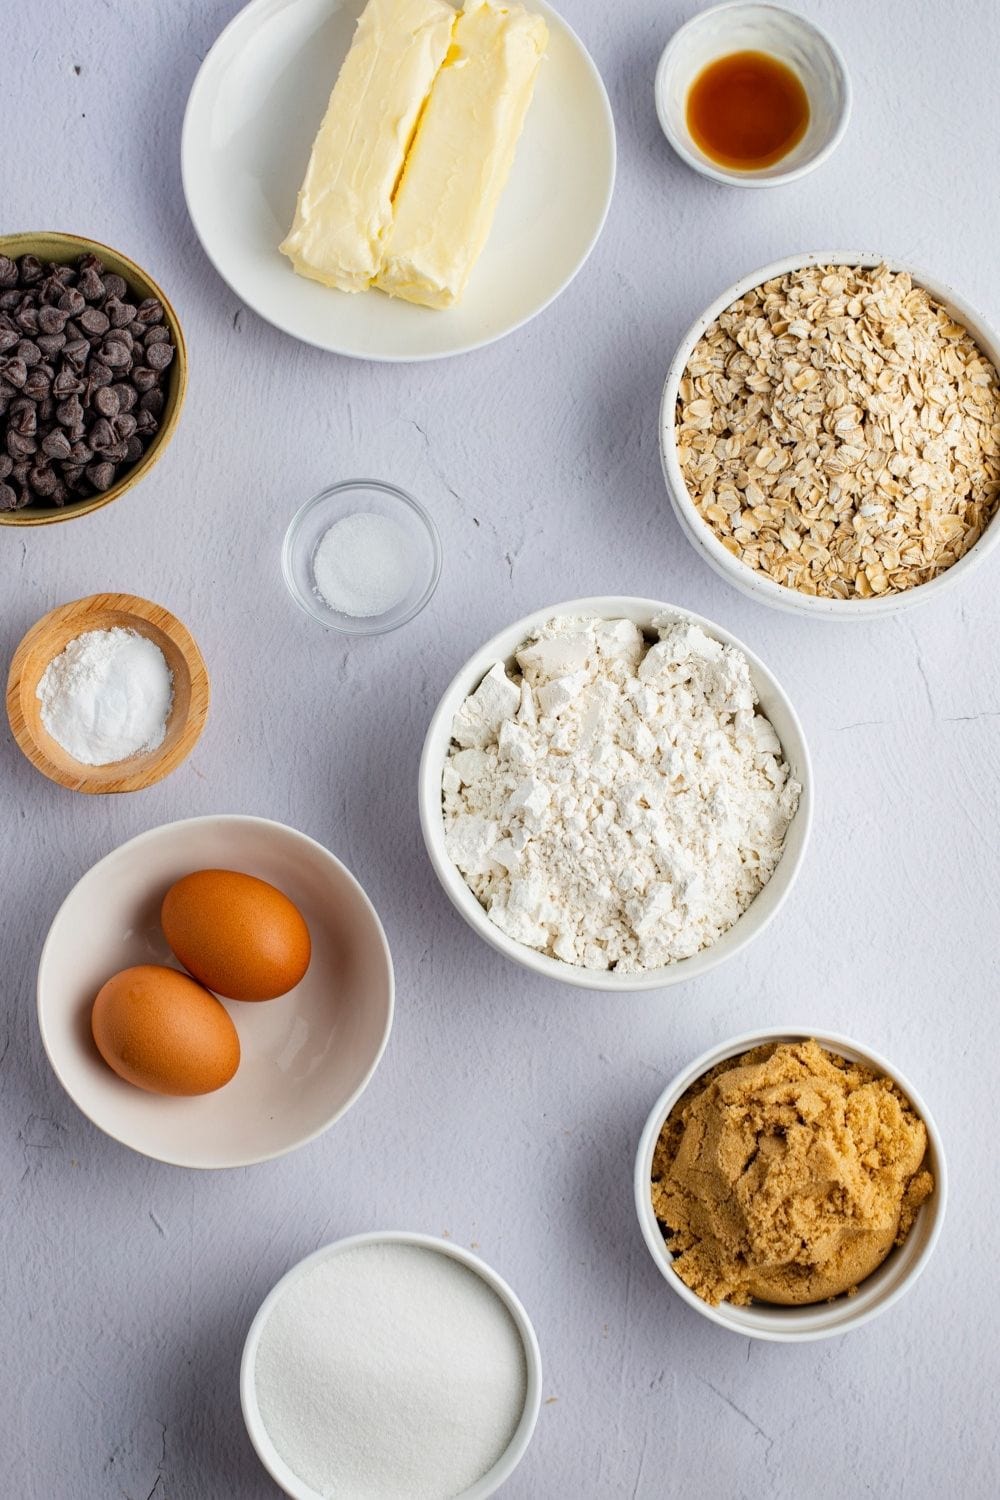 Cowboy Cookies Ingredients: Flour, Eggs, Chocolate Chip Cookies, Brown Sugar and Oats